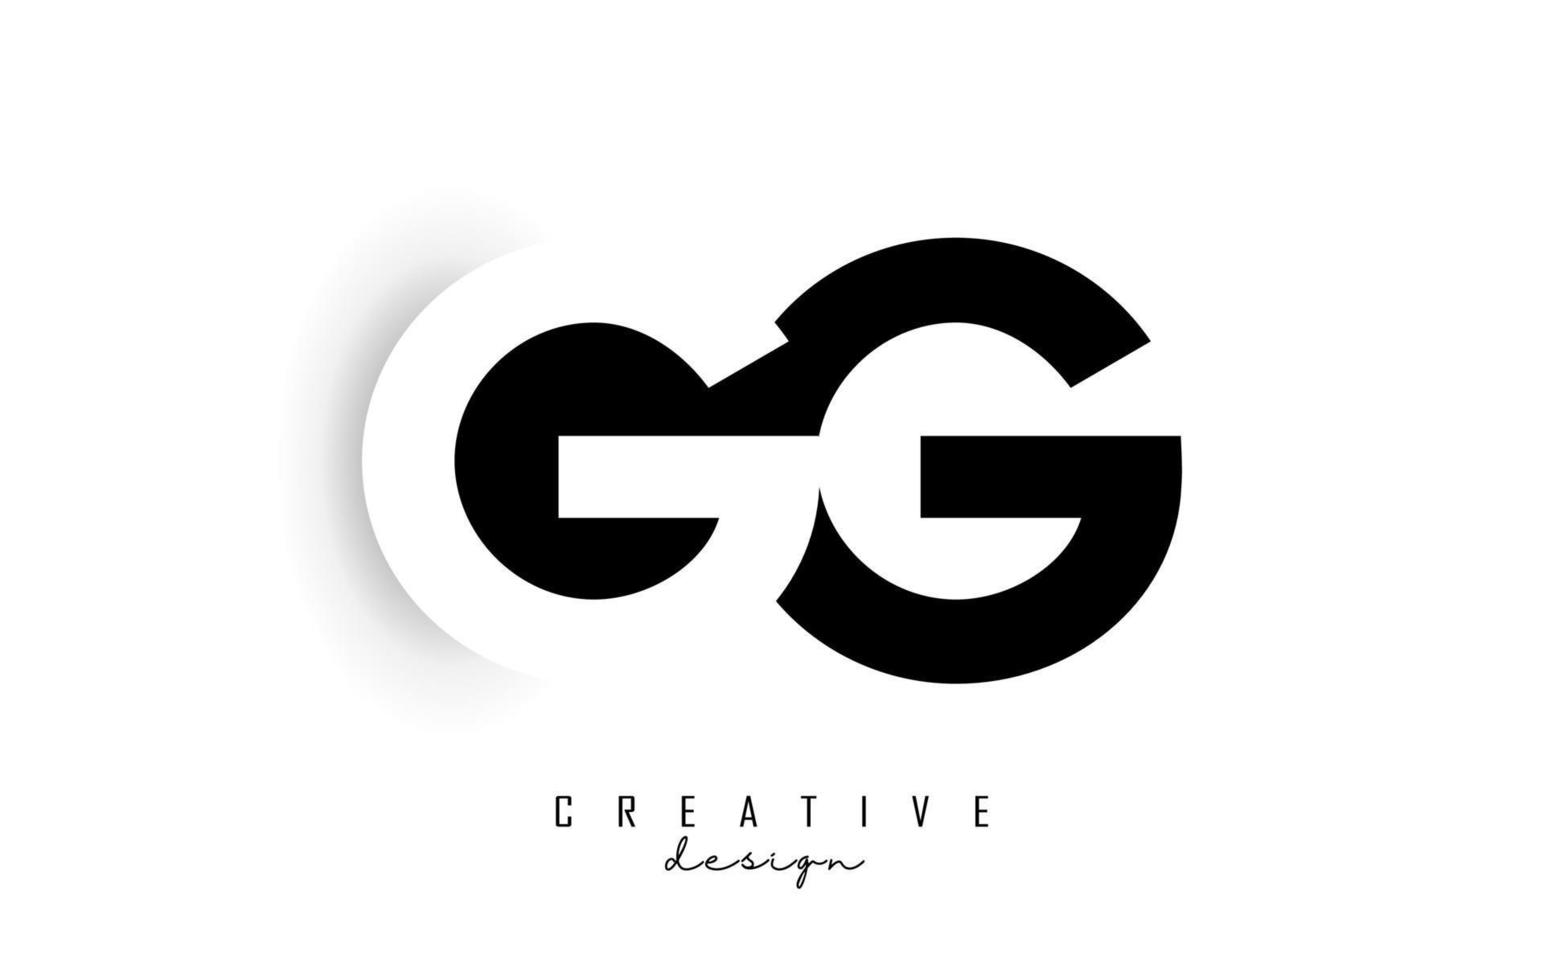 gg bokstäver logotyp med negativ utrymme design. brev med geometrisk typografi. vektor